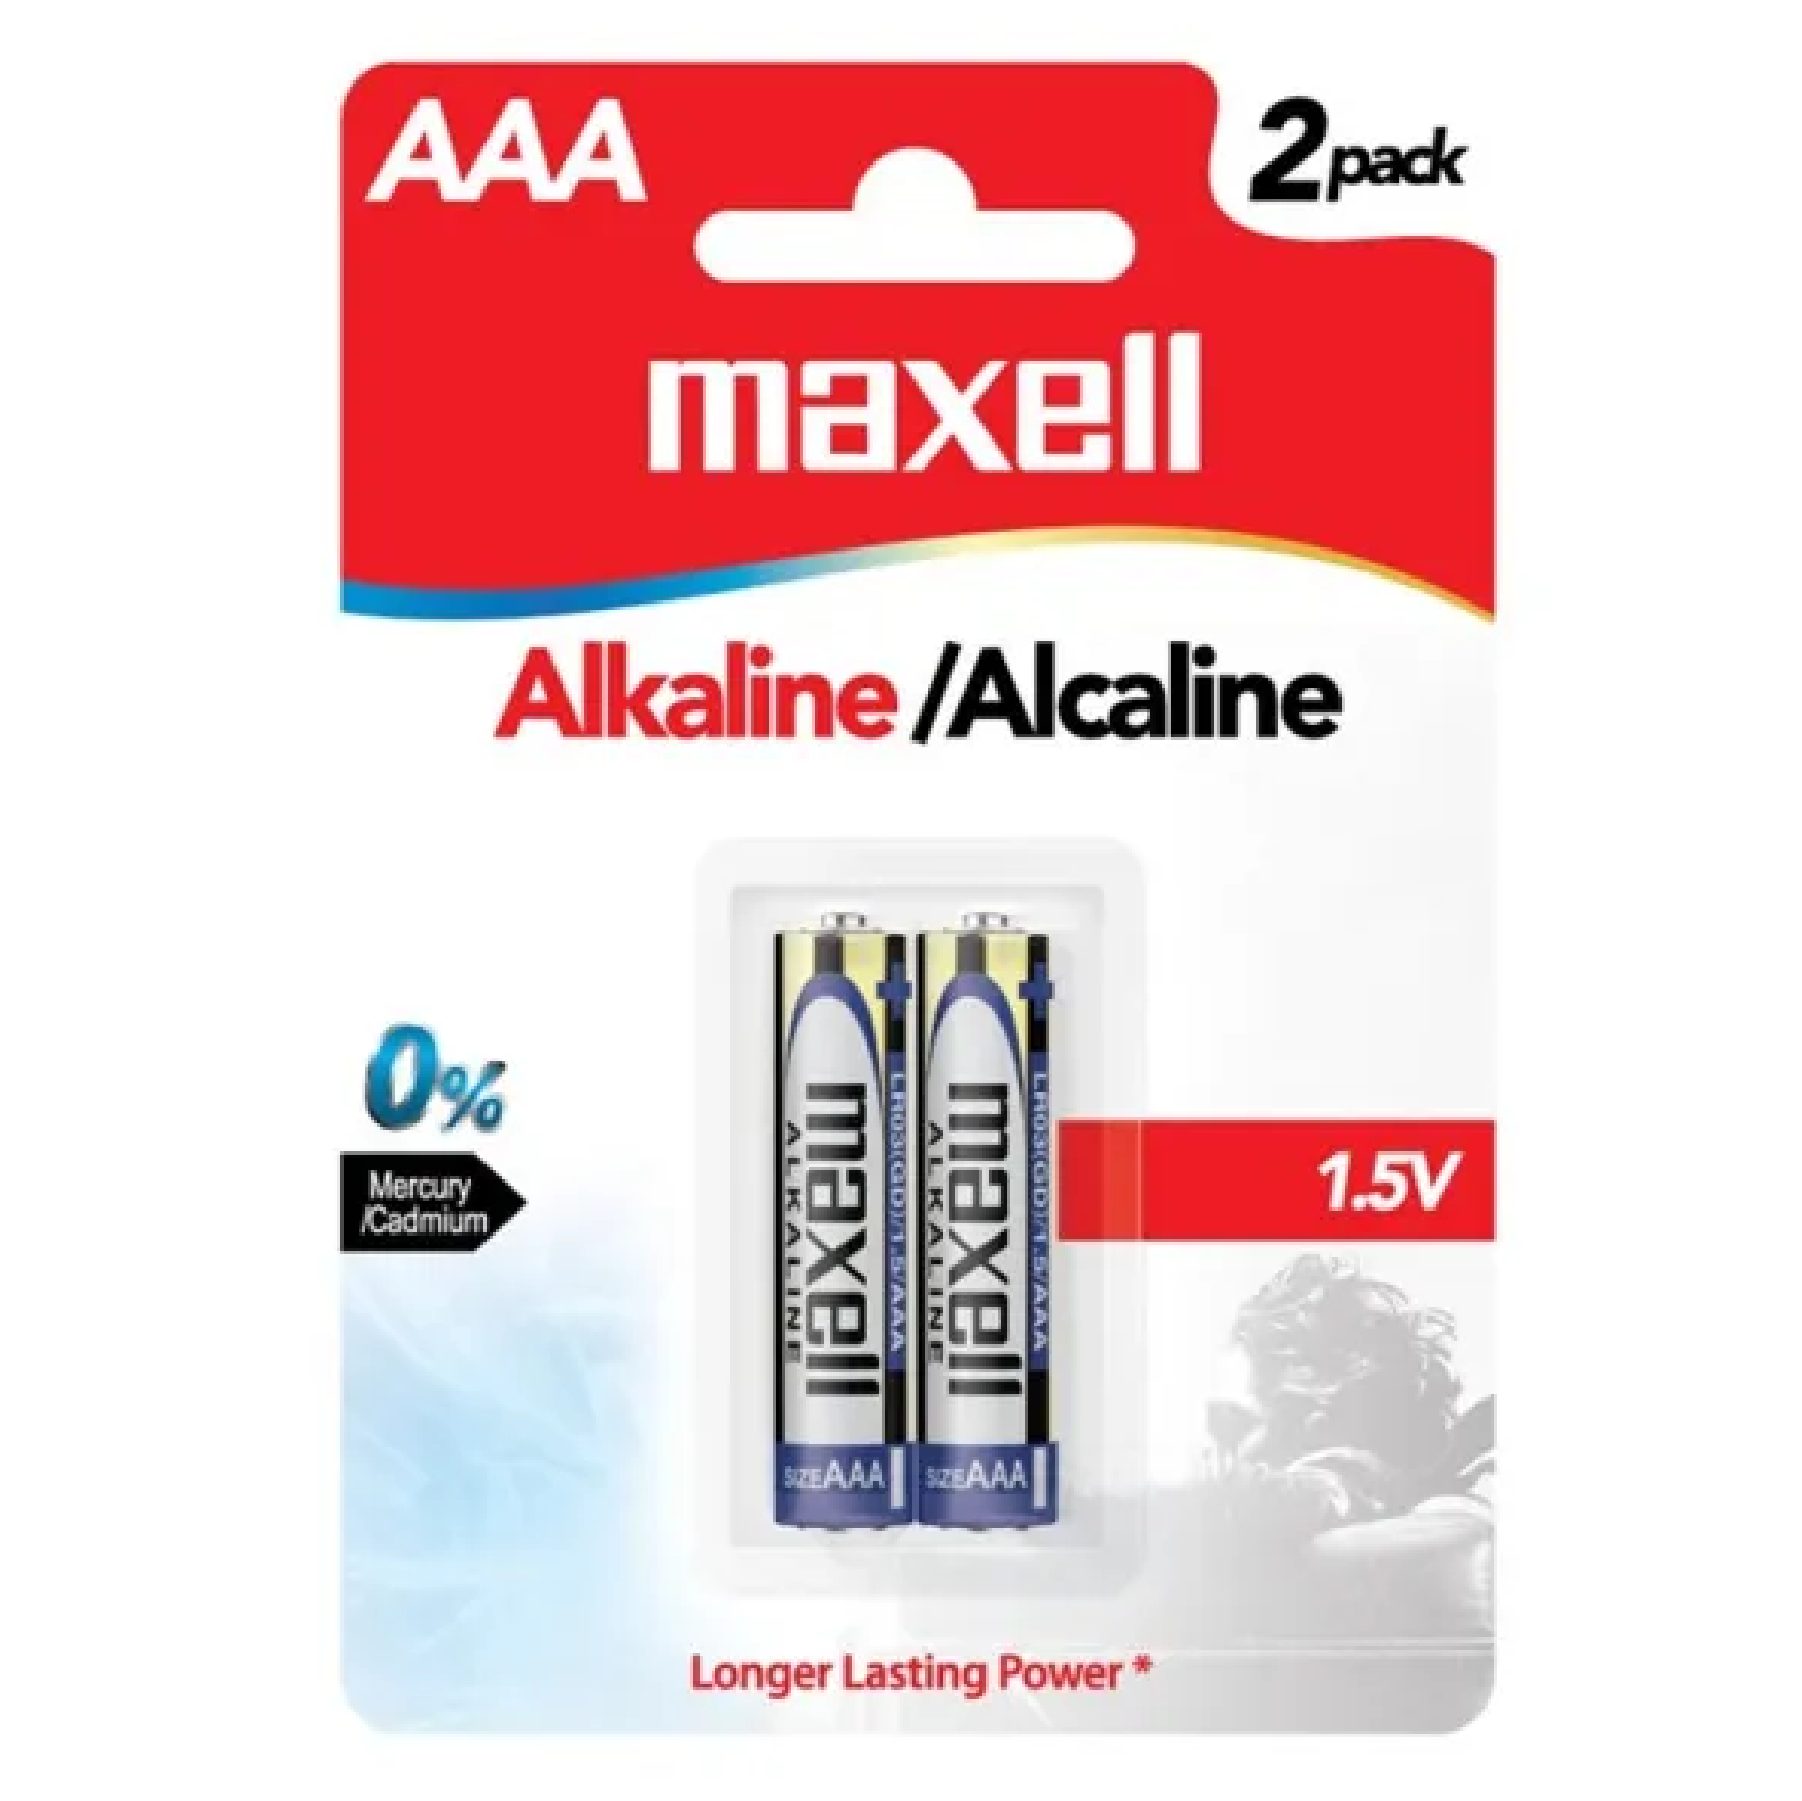 MAXELL AAA Alkaline Battery 2PC/PACK 1.5V Long Lasting